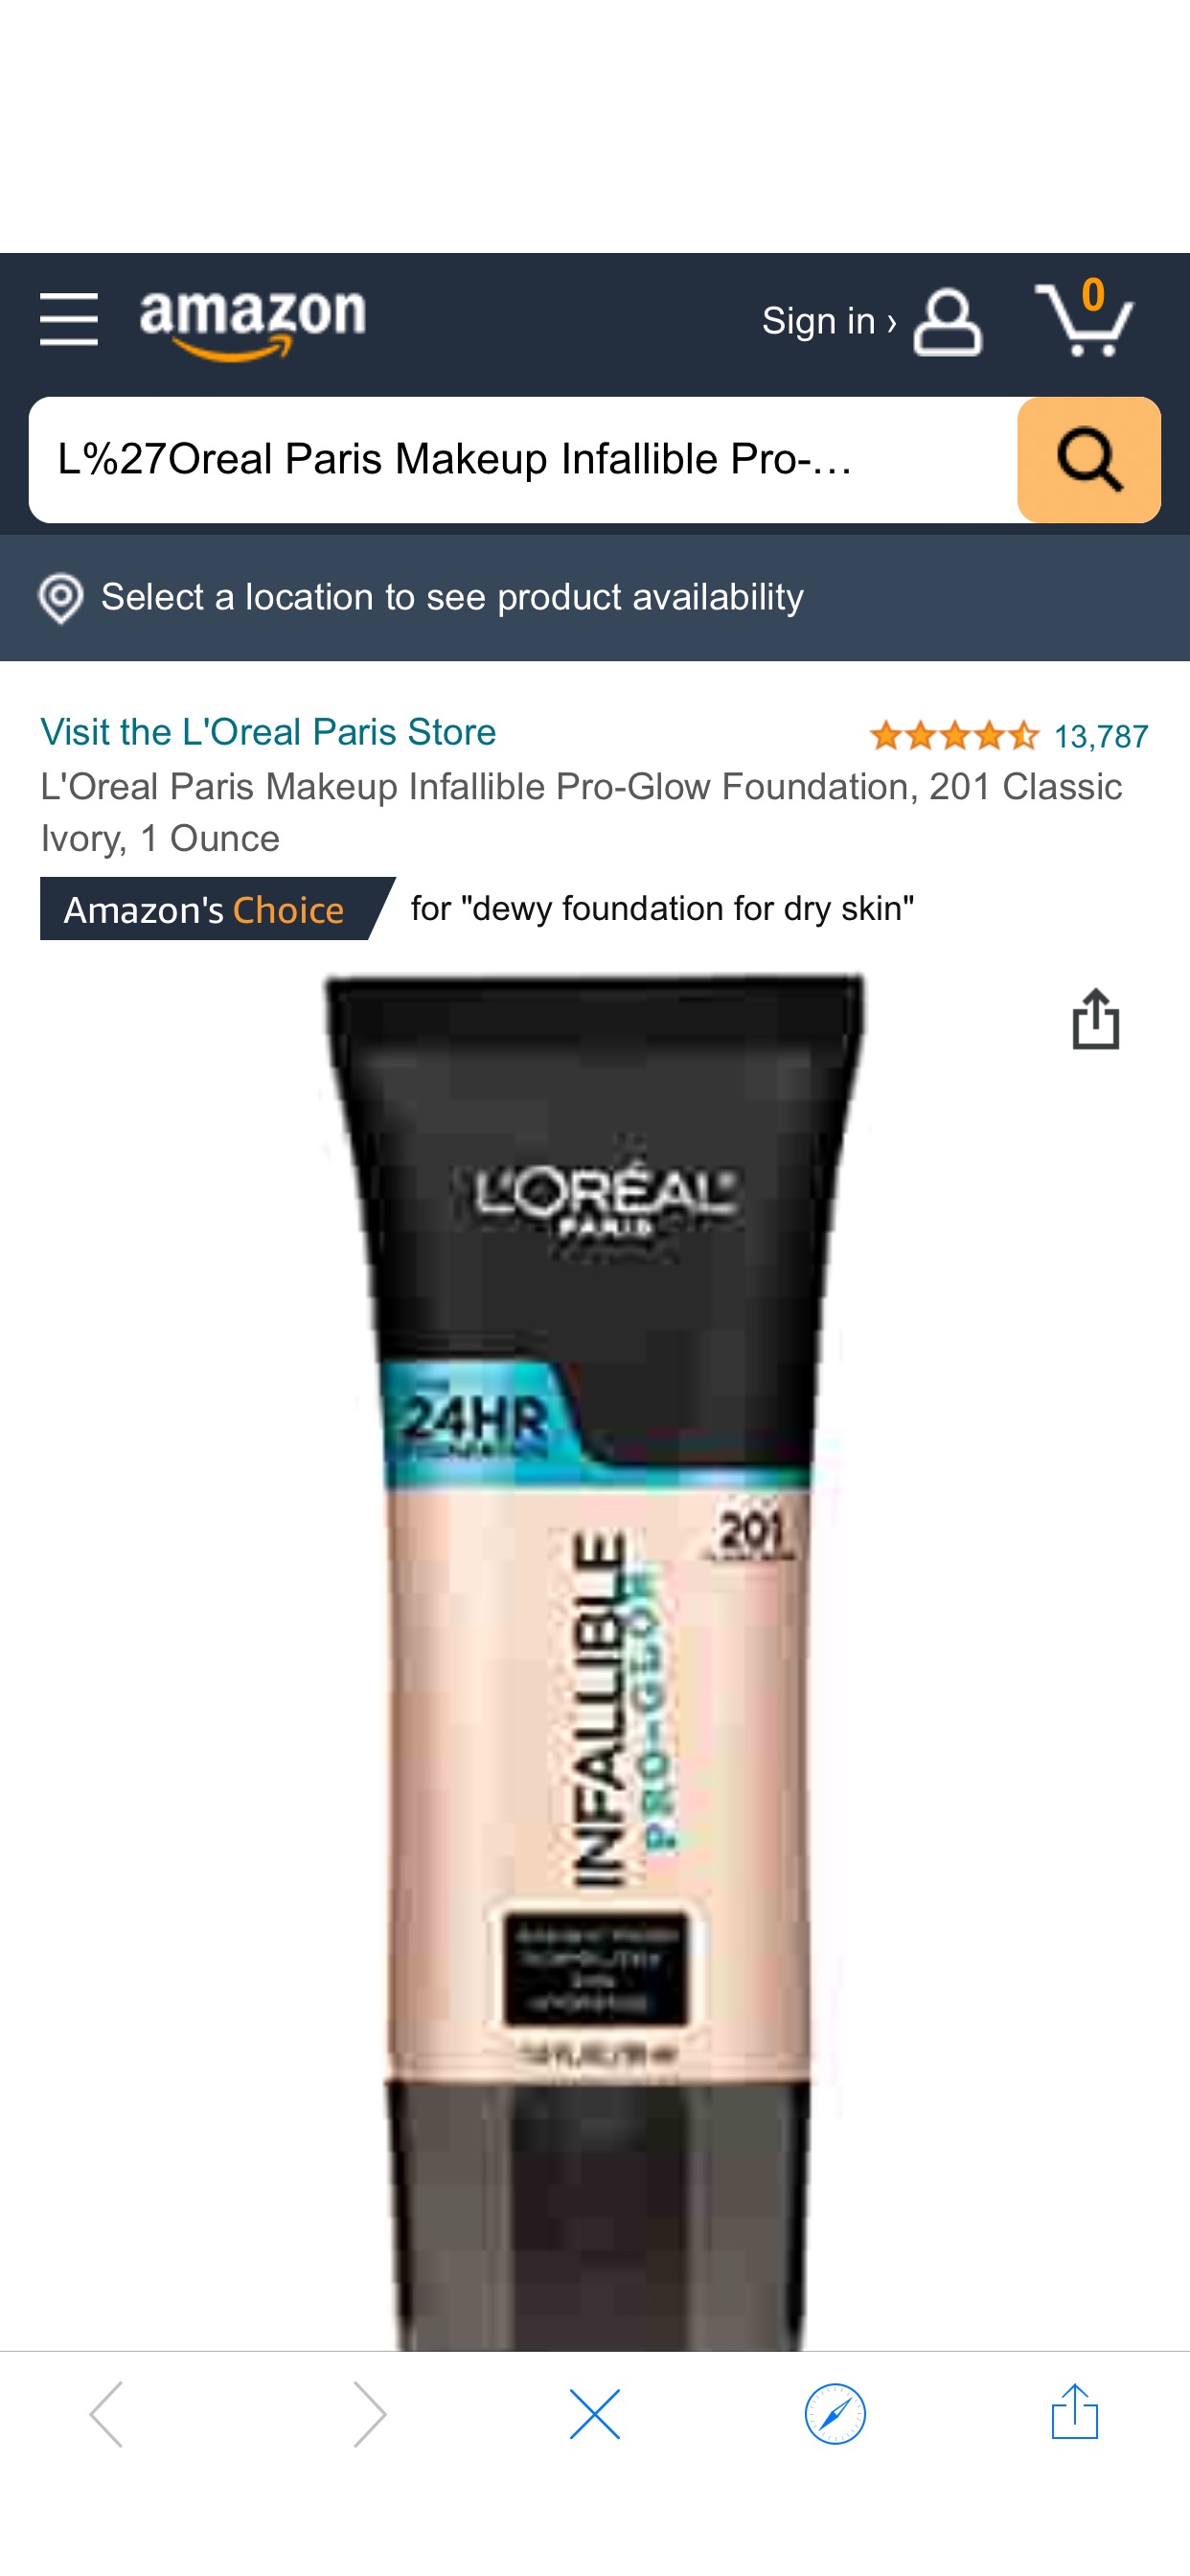 Amazon.com : L'Oreal Paris Makeup Infallible Pro-Glow Foundation, 201 Classic Ivory, 1 Ounce : Beauty & Personal Care